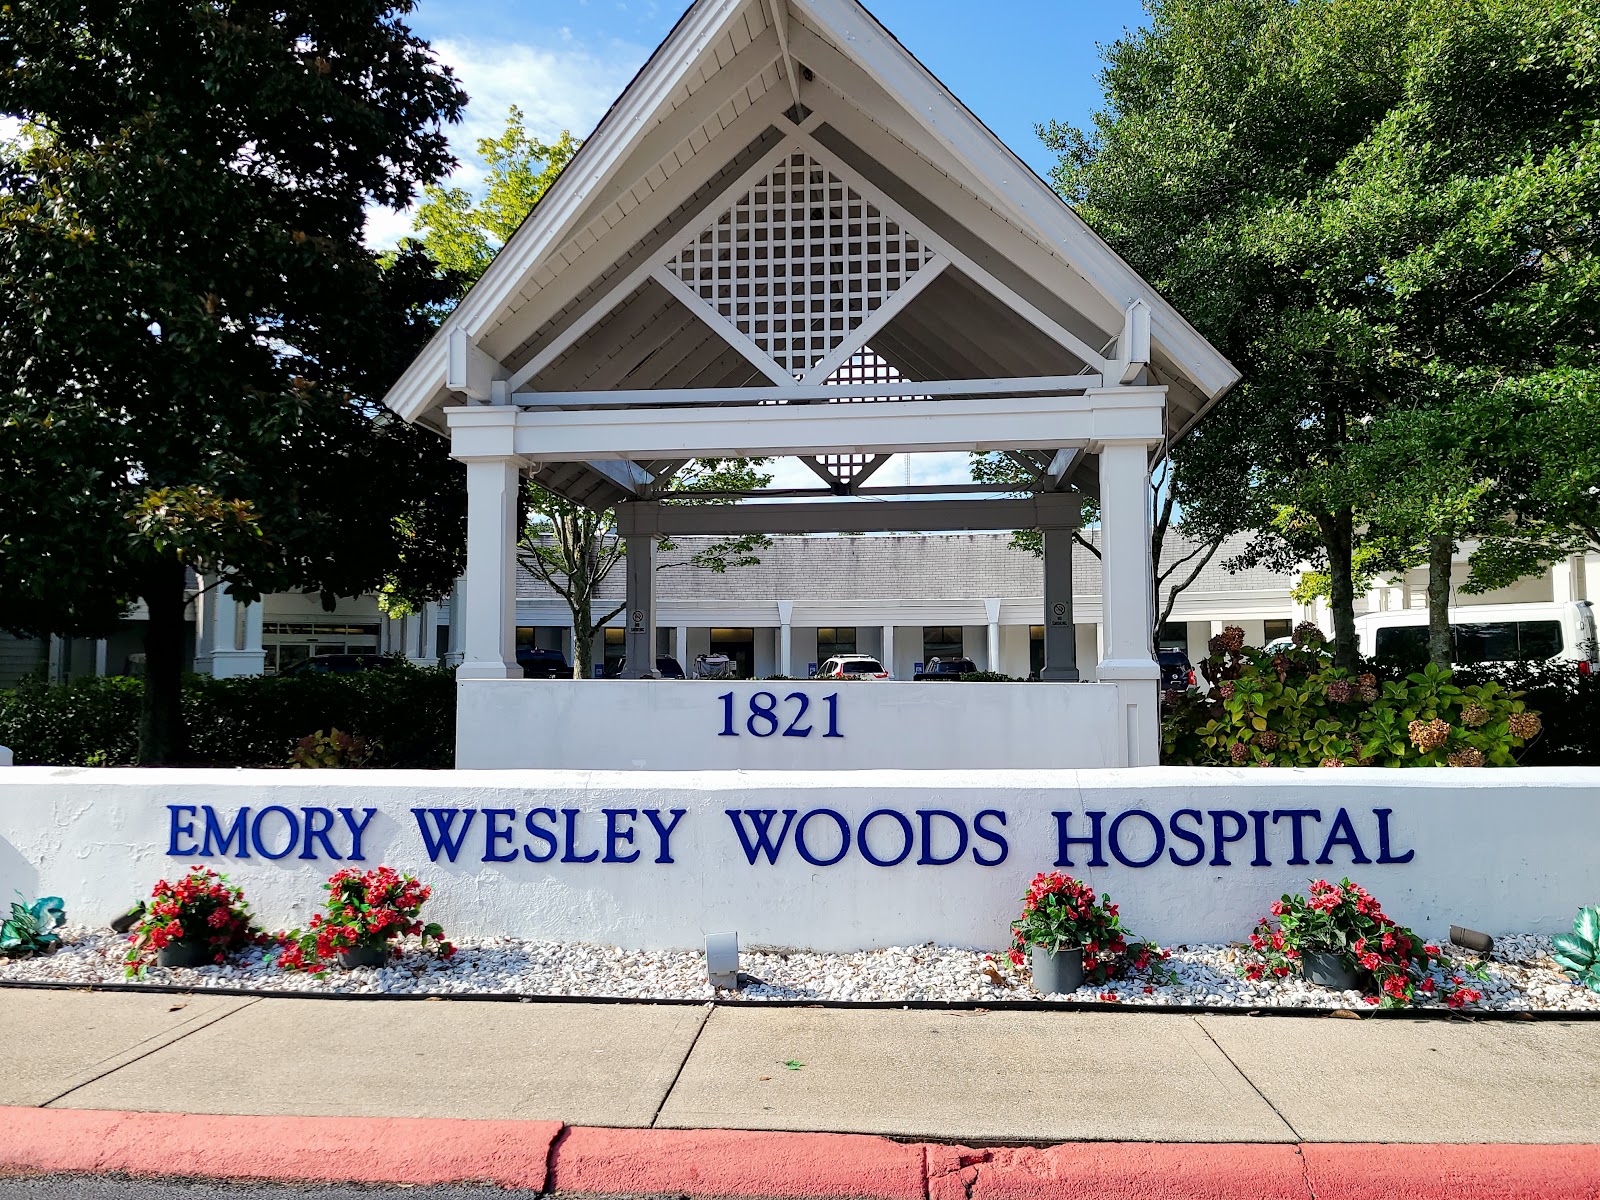 Emory Wesley Woods Hospital